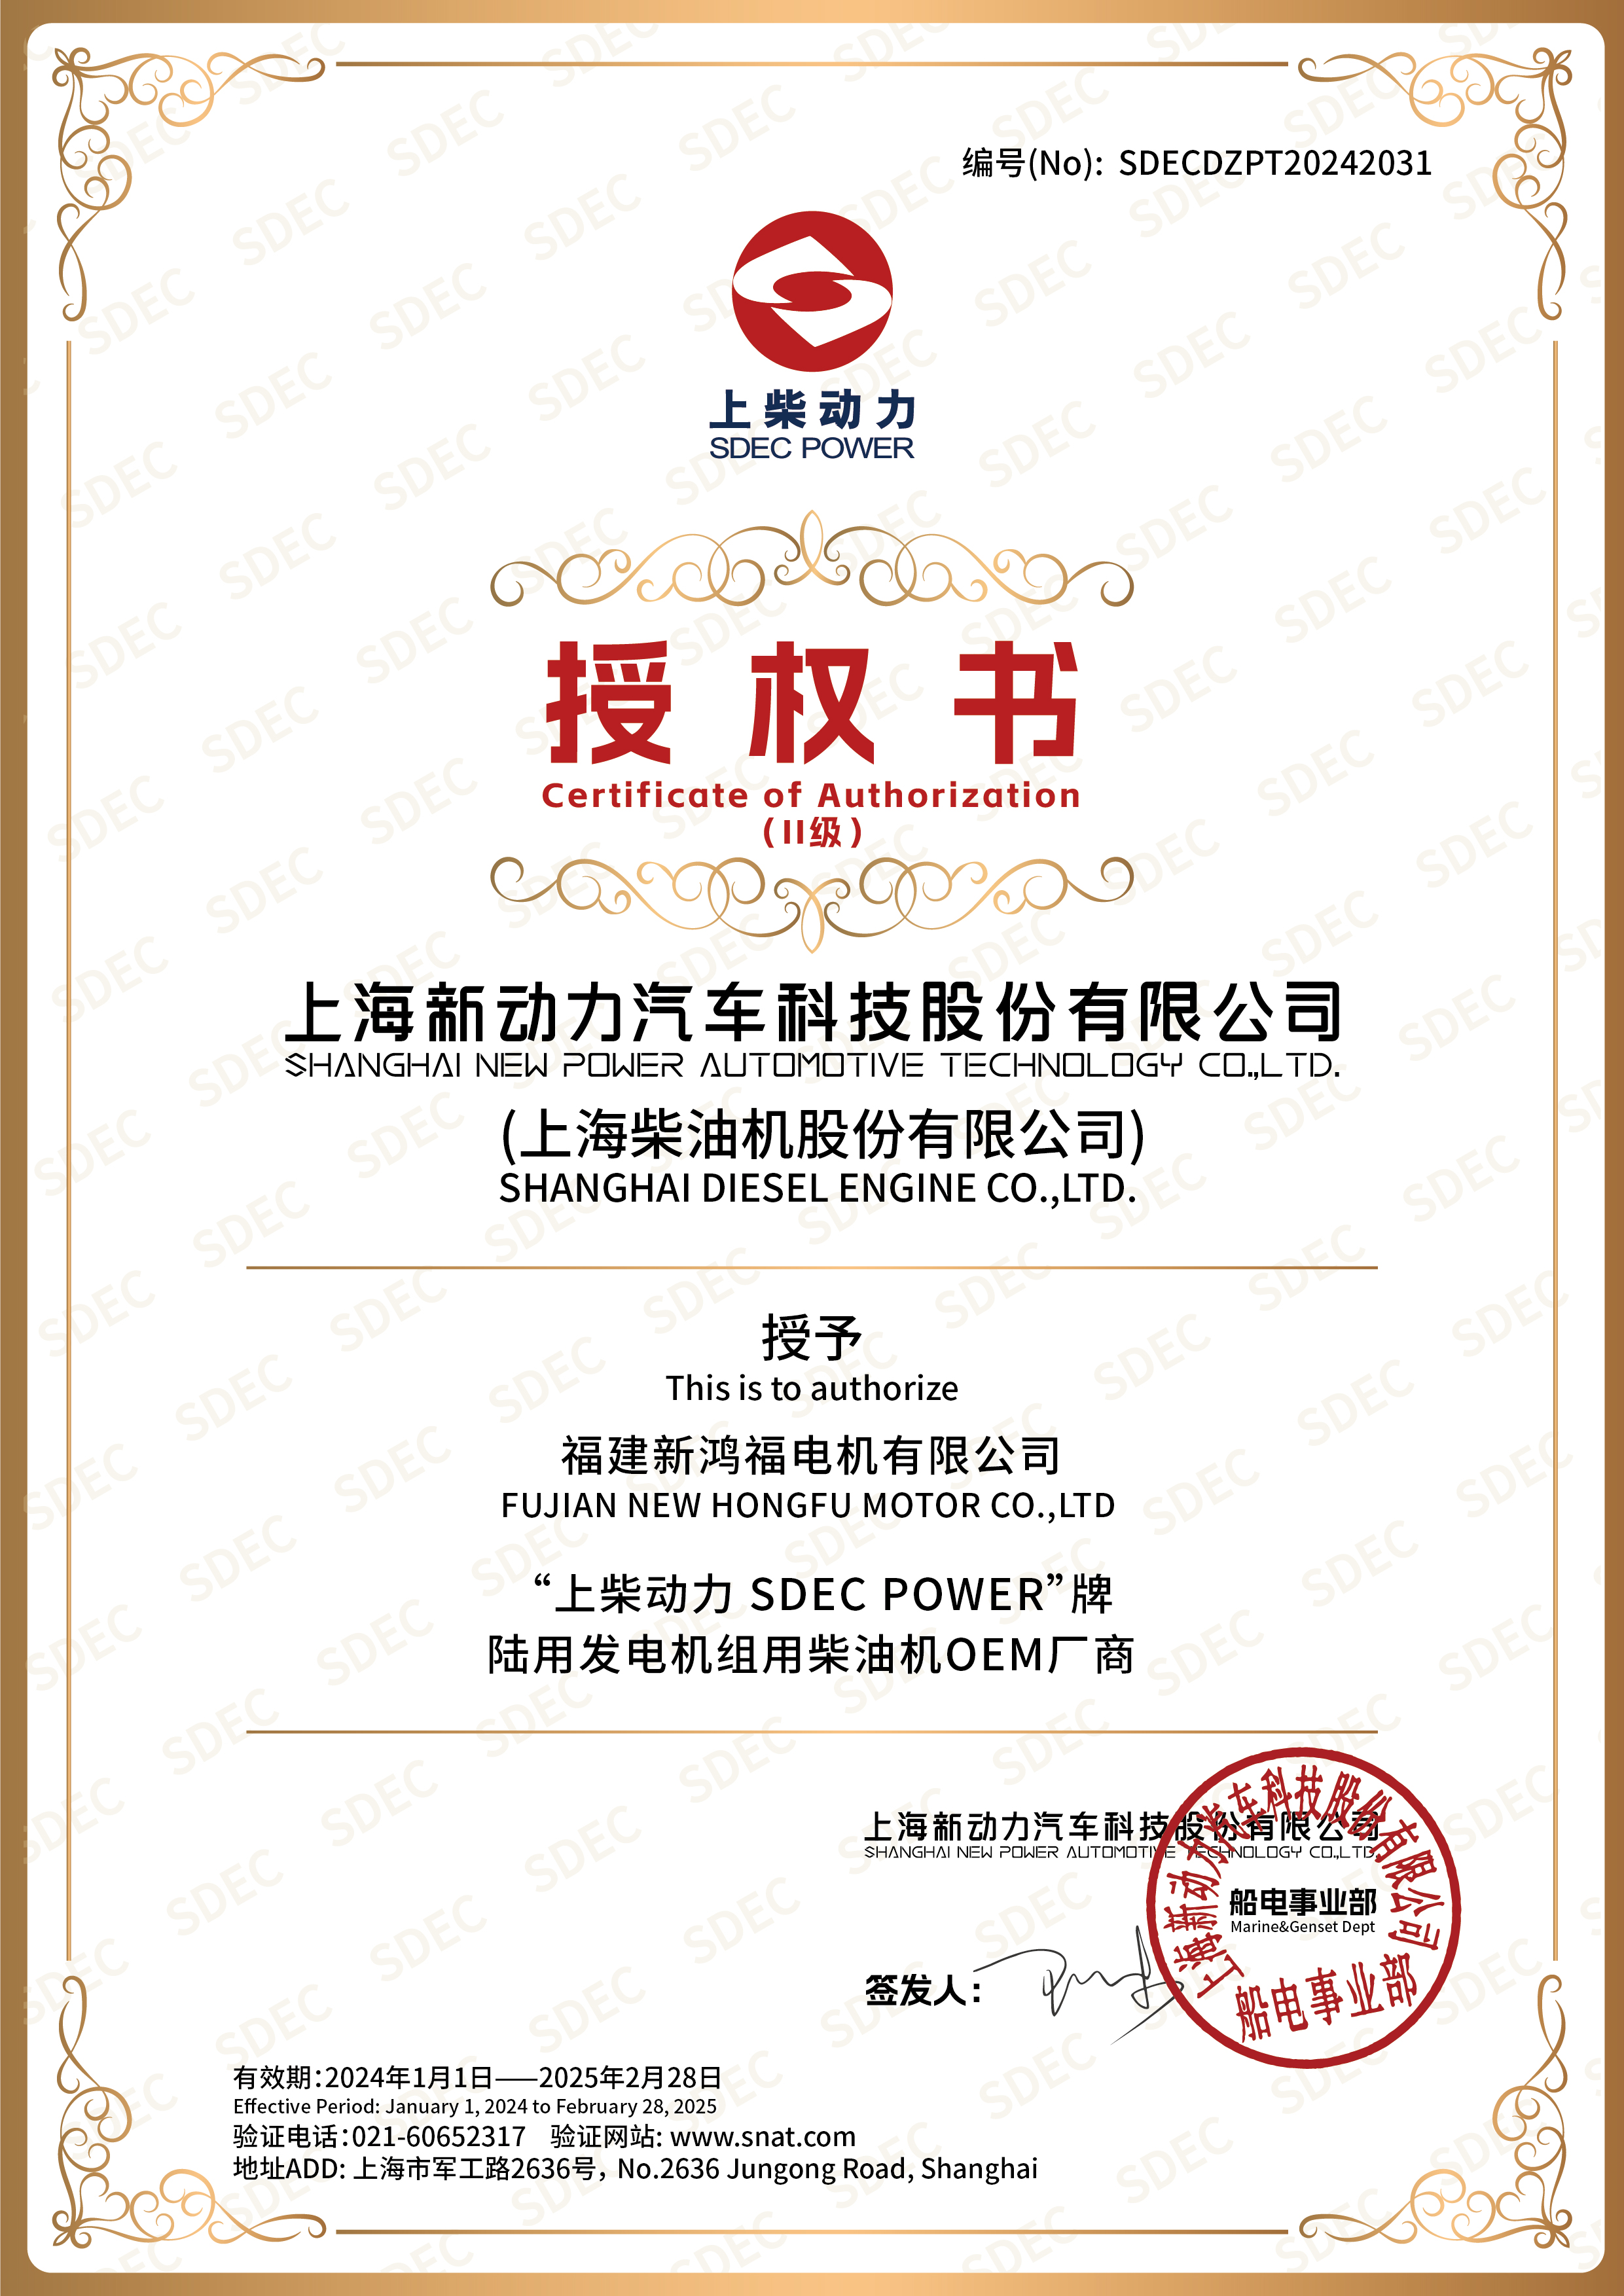 新 鸿福 SDEC OEM 证书